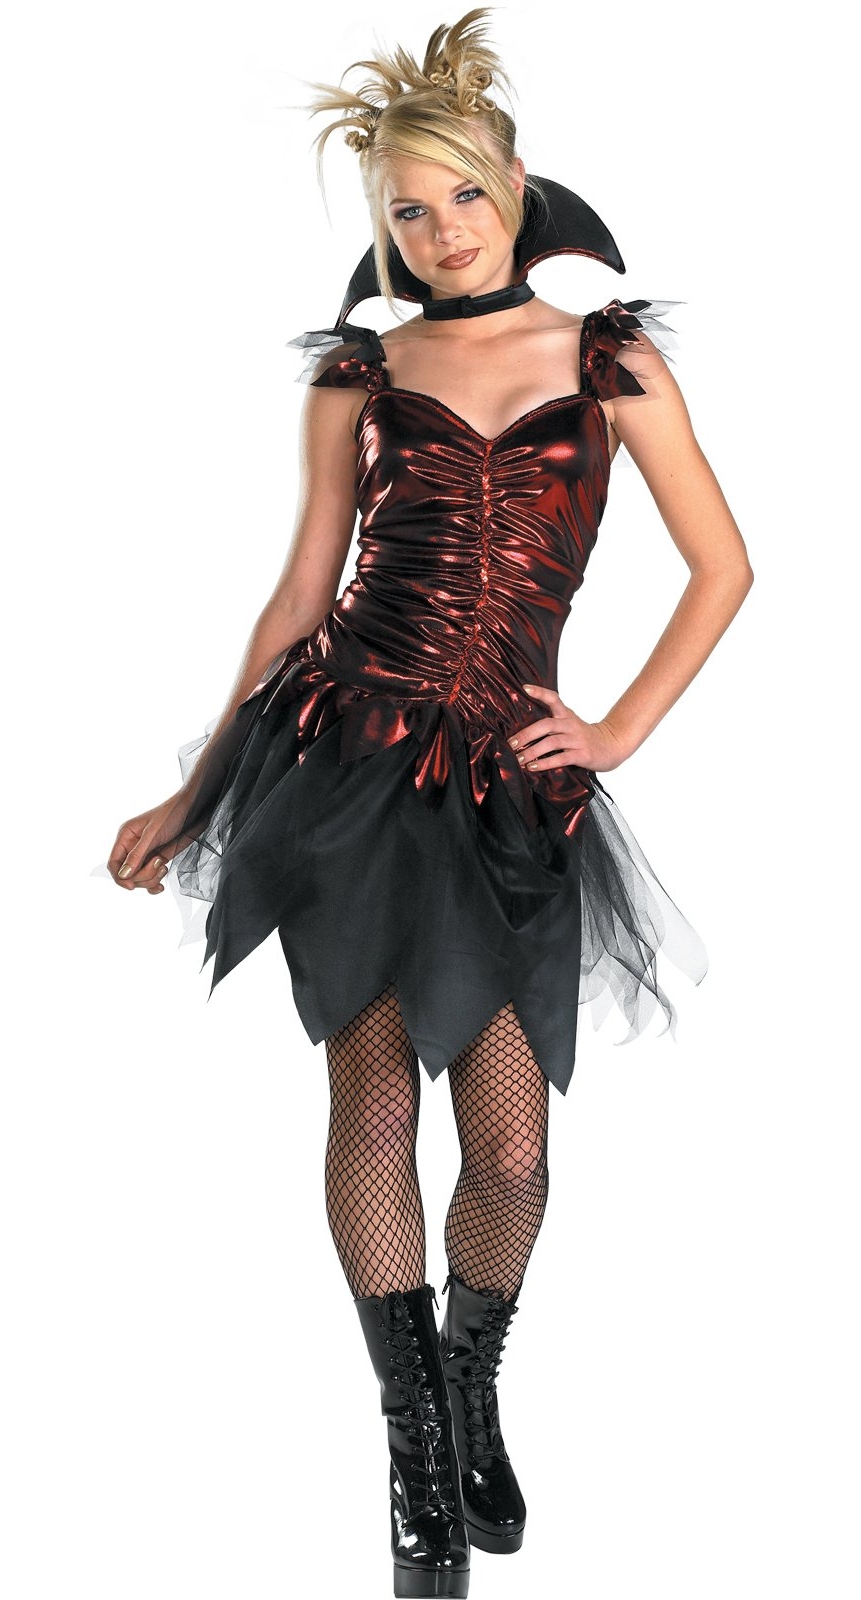 Blonde Gothic Girl wearing Black Fishnet Pantyhose and Black Short Dress